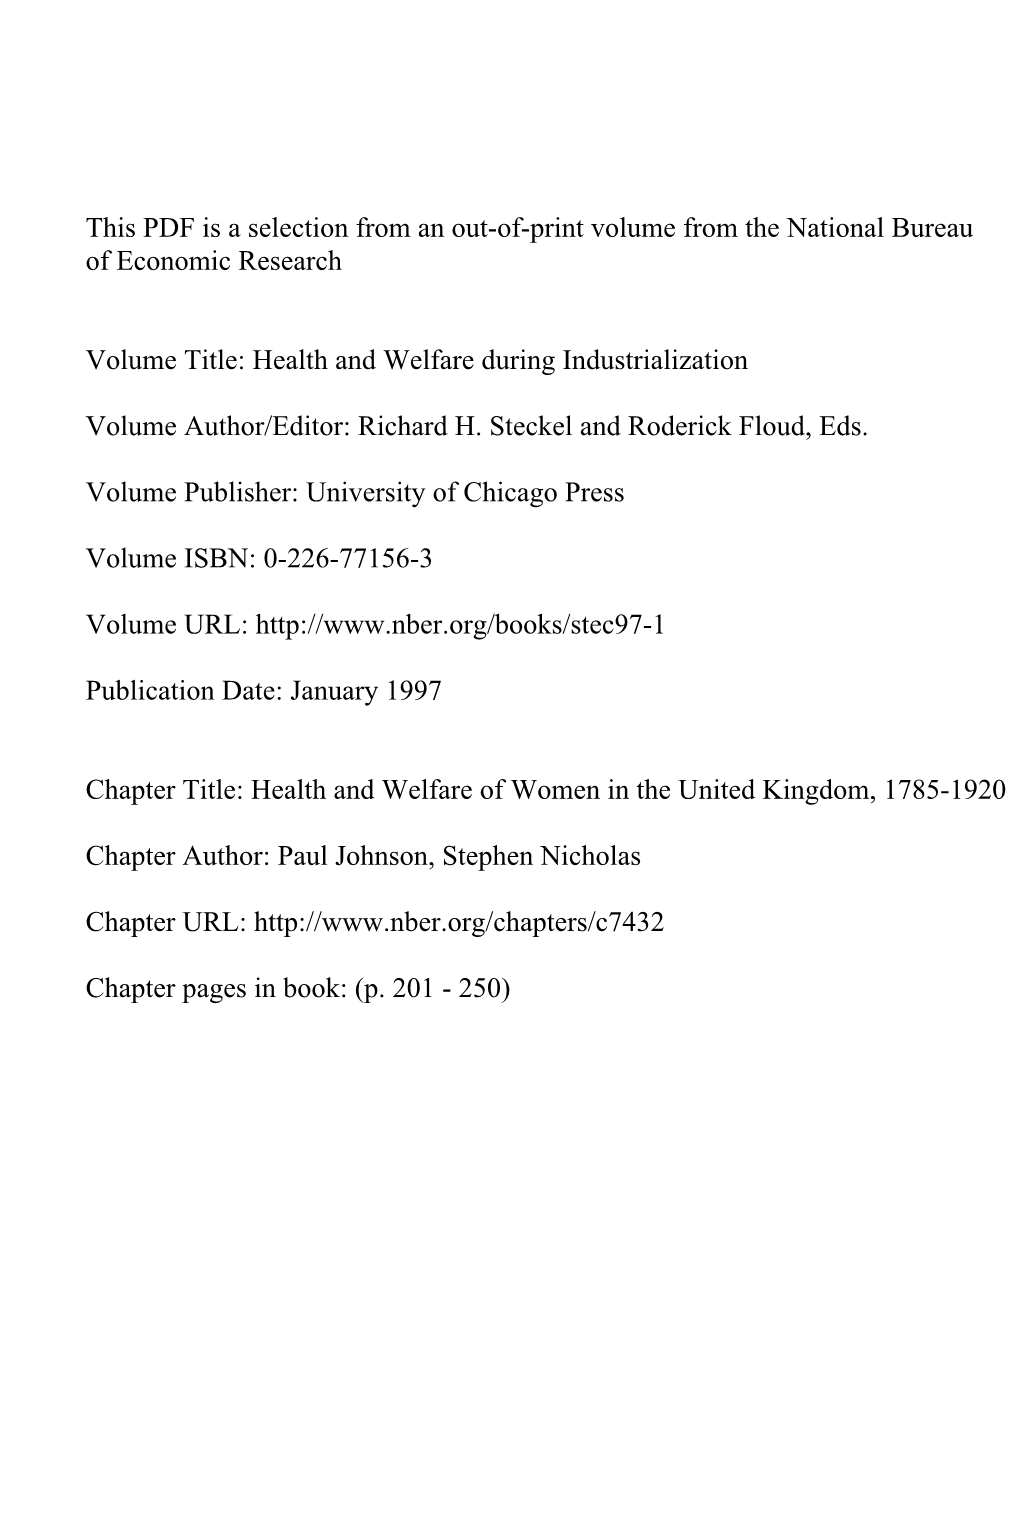 Health and Welfare of Women in the United Kingdom, 1785-1920